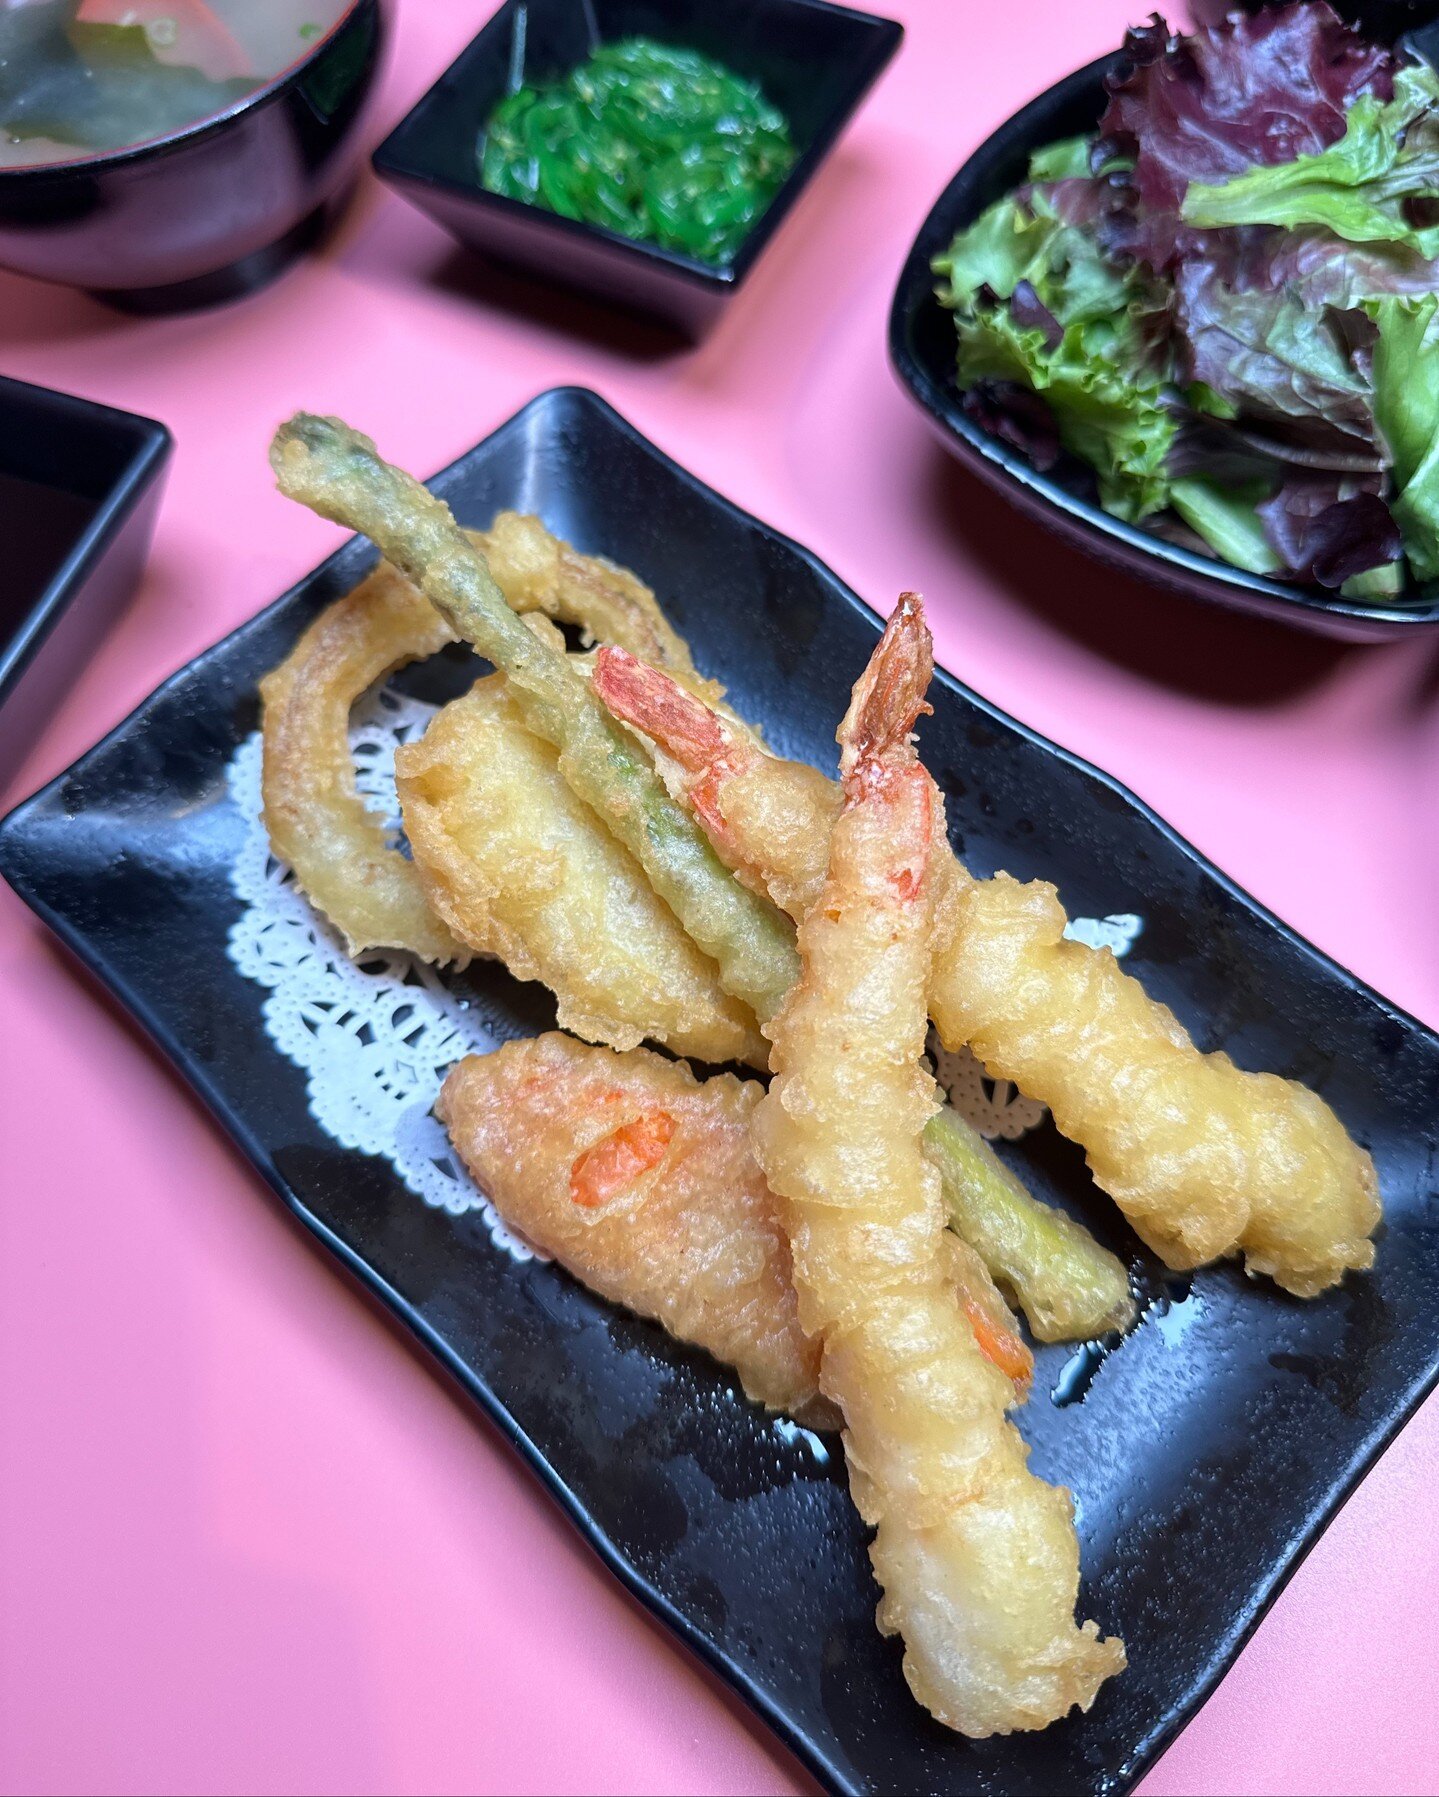 Savor the crispy, golden temptation of tempura deliciousness! #UmamiJourney 🍤❤️ 

◾️◽️◾️◽️◾️◽️◾️◽️◾️◽️ 

🍣 𝗔𝗬𝗖𝗘 𝗦𝗨𝗦𝗛𝗜 𝗛𝗢𝗨𝗦𝗘 𝗚𝗢𝗬𝗘𝗠𝗢𝗡 
⏰ ᴅᴀɪʟʏ: 12:00 ᴘᴍ - 11:00 ᴘᴍ 
⏰ ʟᴀꜱᴛ ꜱᴇᴀᴛɪɴɢ ꜰᴏʀ ᴀʏᴄᴇ 10ᴘᴍ 
⏰ ʟᴀꜱᴛ ᴏʀᴅᴇʀ 10:30ᴘᴍ 
📍 5255 ꜱ ᴅᴇ